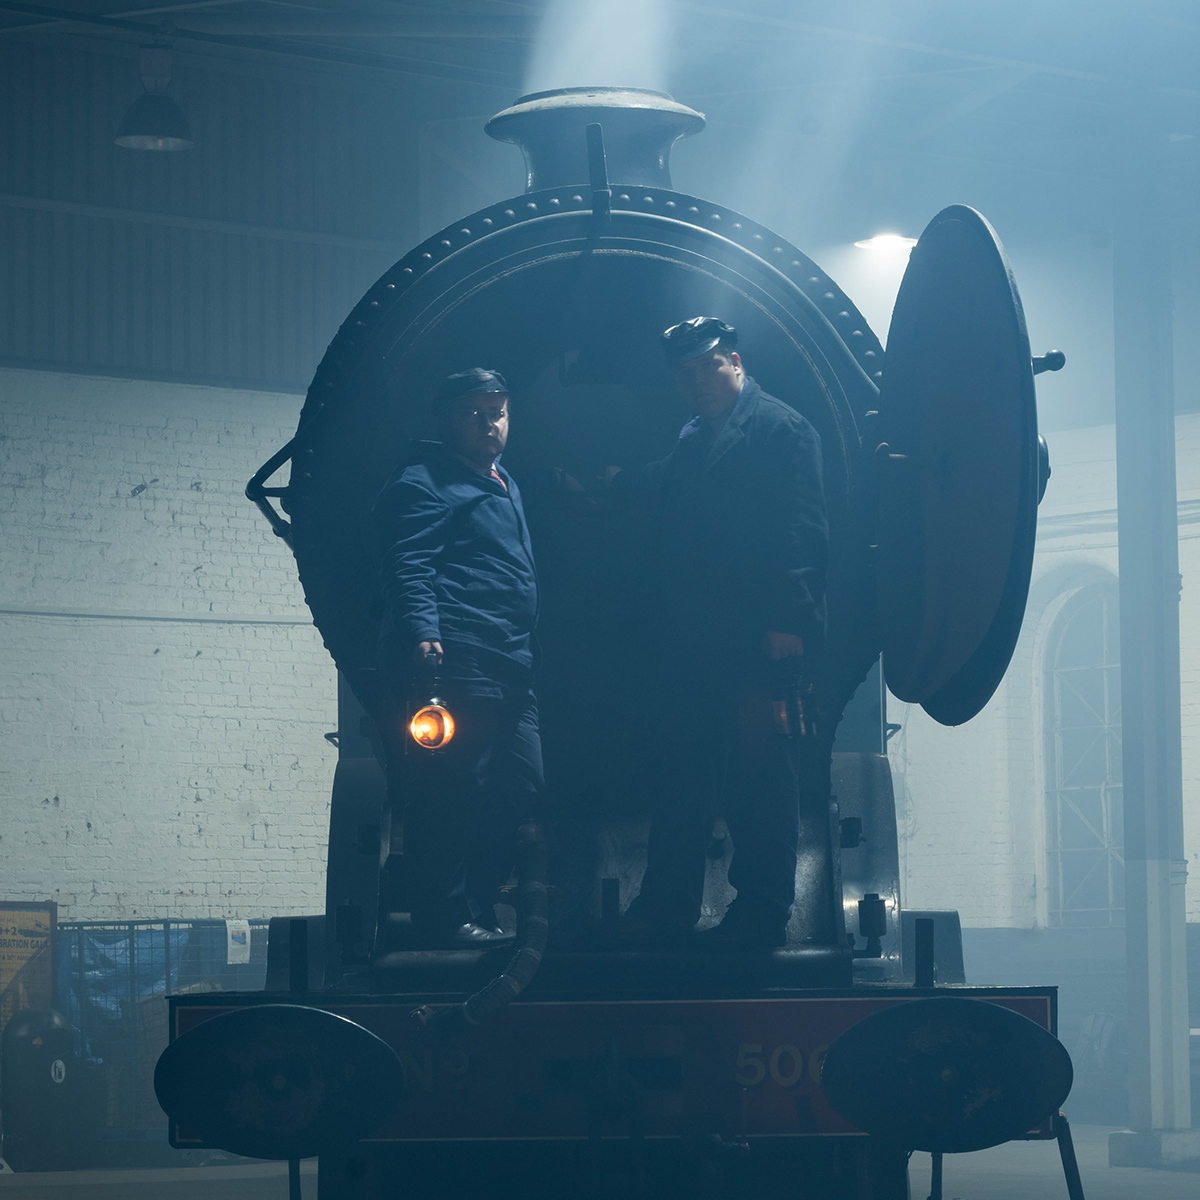 Steam Steam Locomotive barrow hill engine shed nikon school steam engine Steam Railway